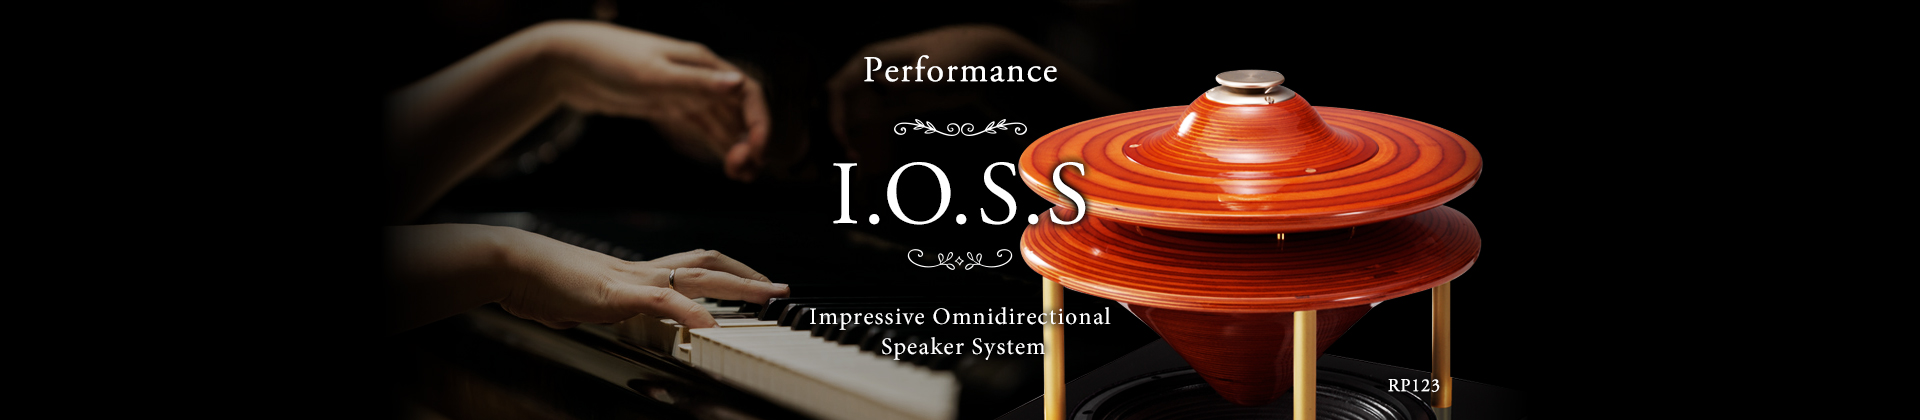 High Quality Sound|IOSS|Impressive Omnidirectional Speaker System